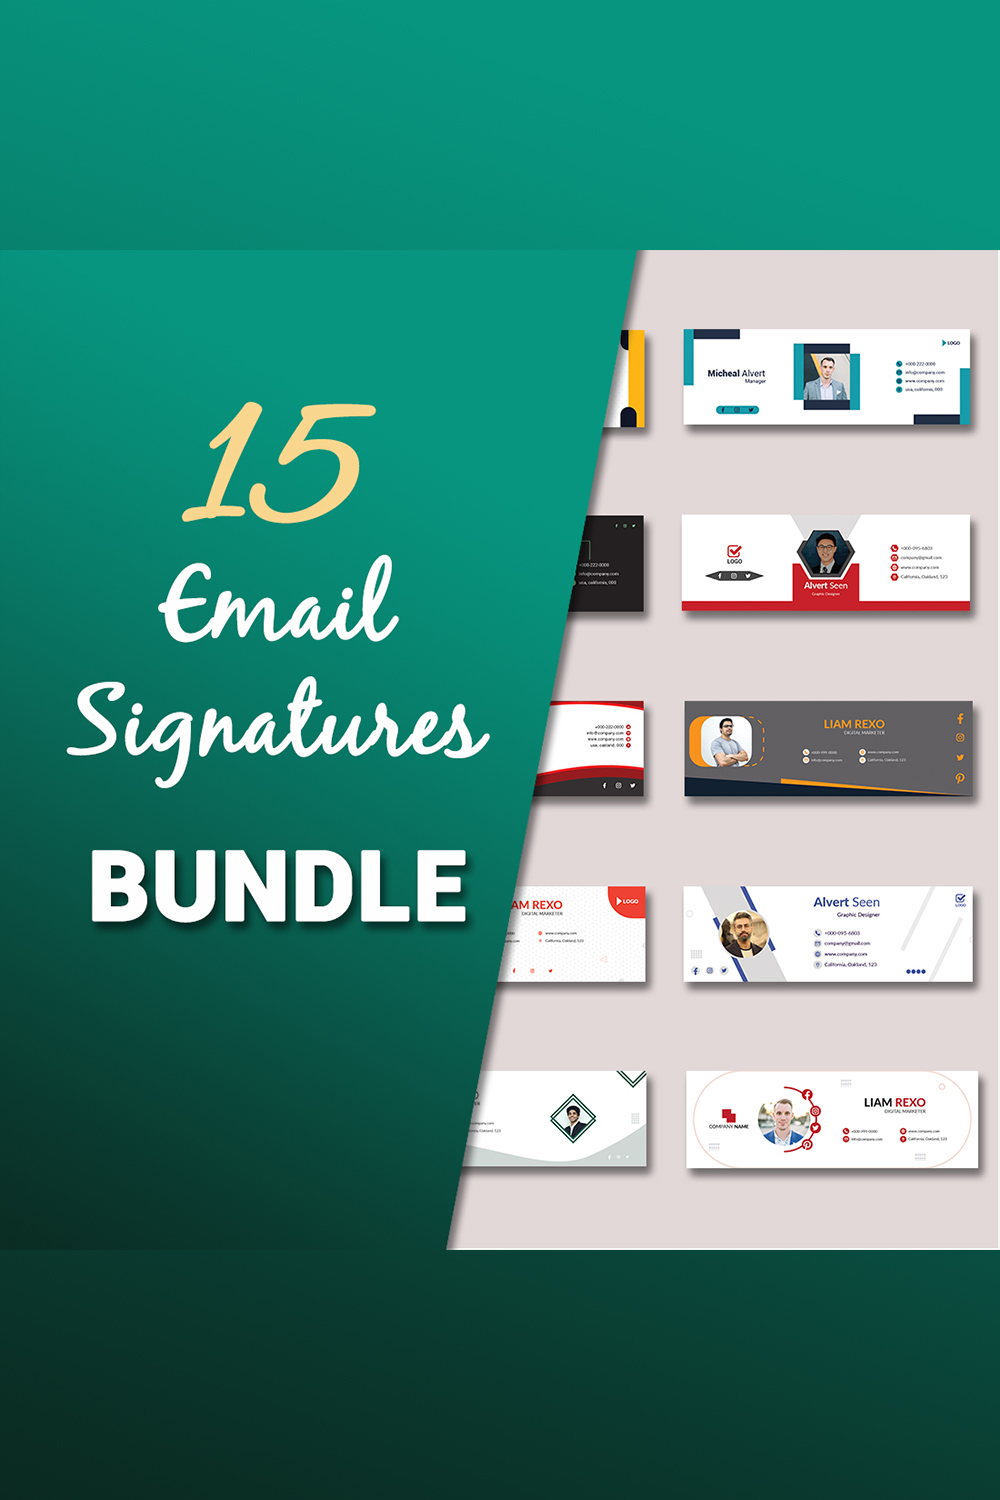 Email Signatures Bundle Pack pinterest image.